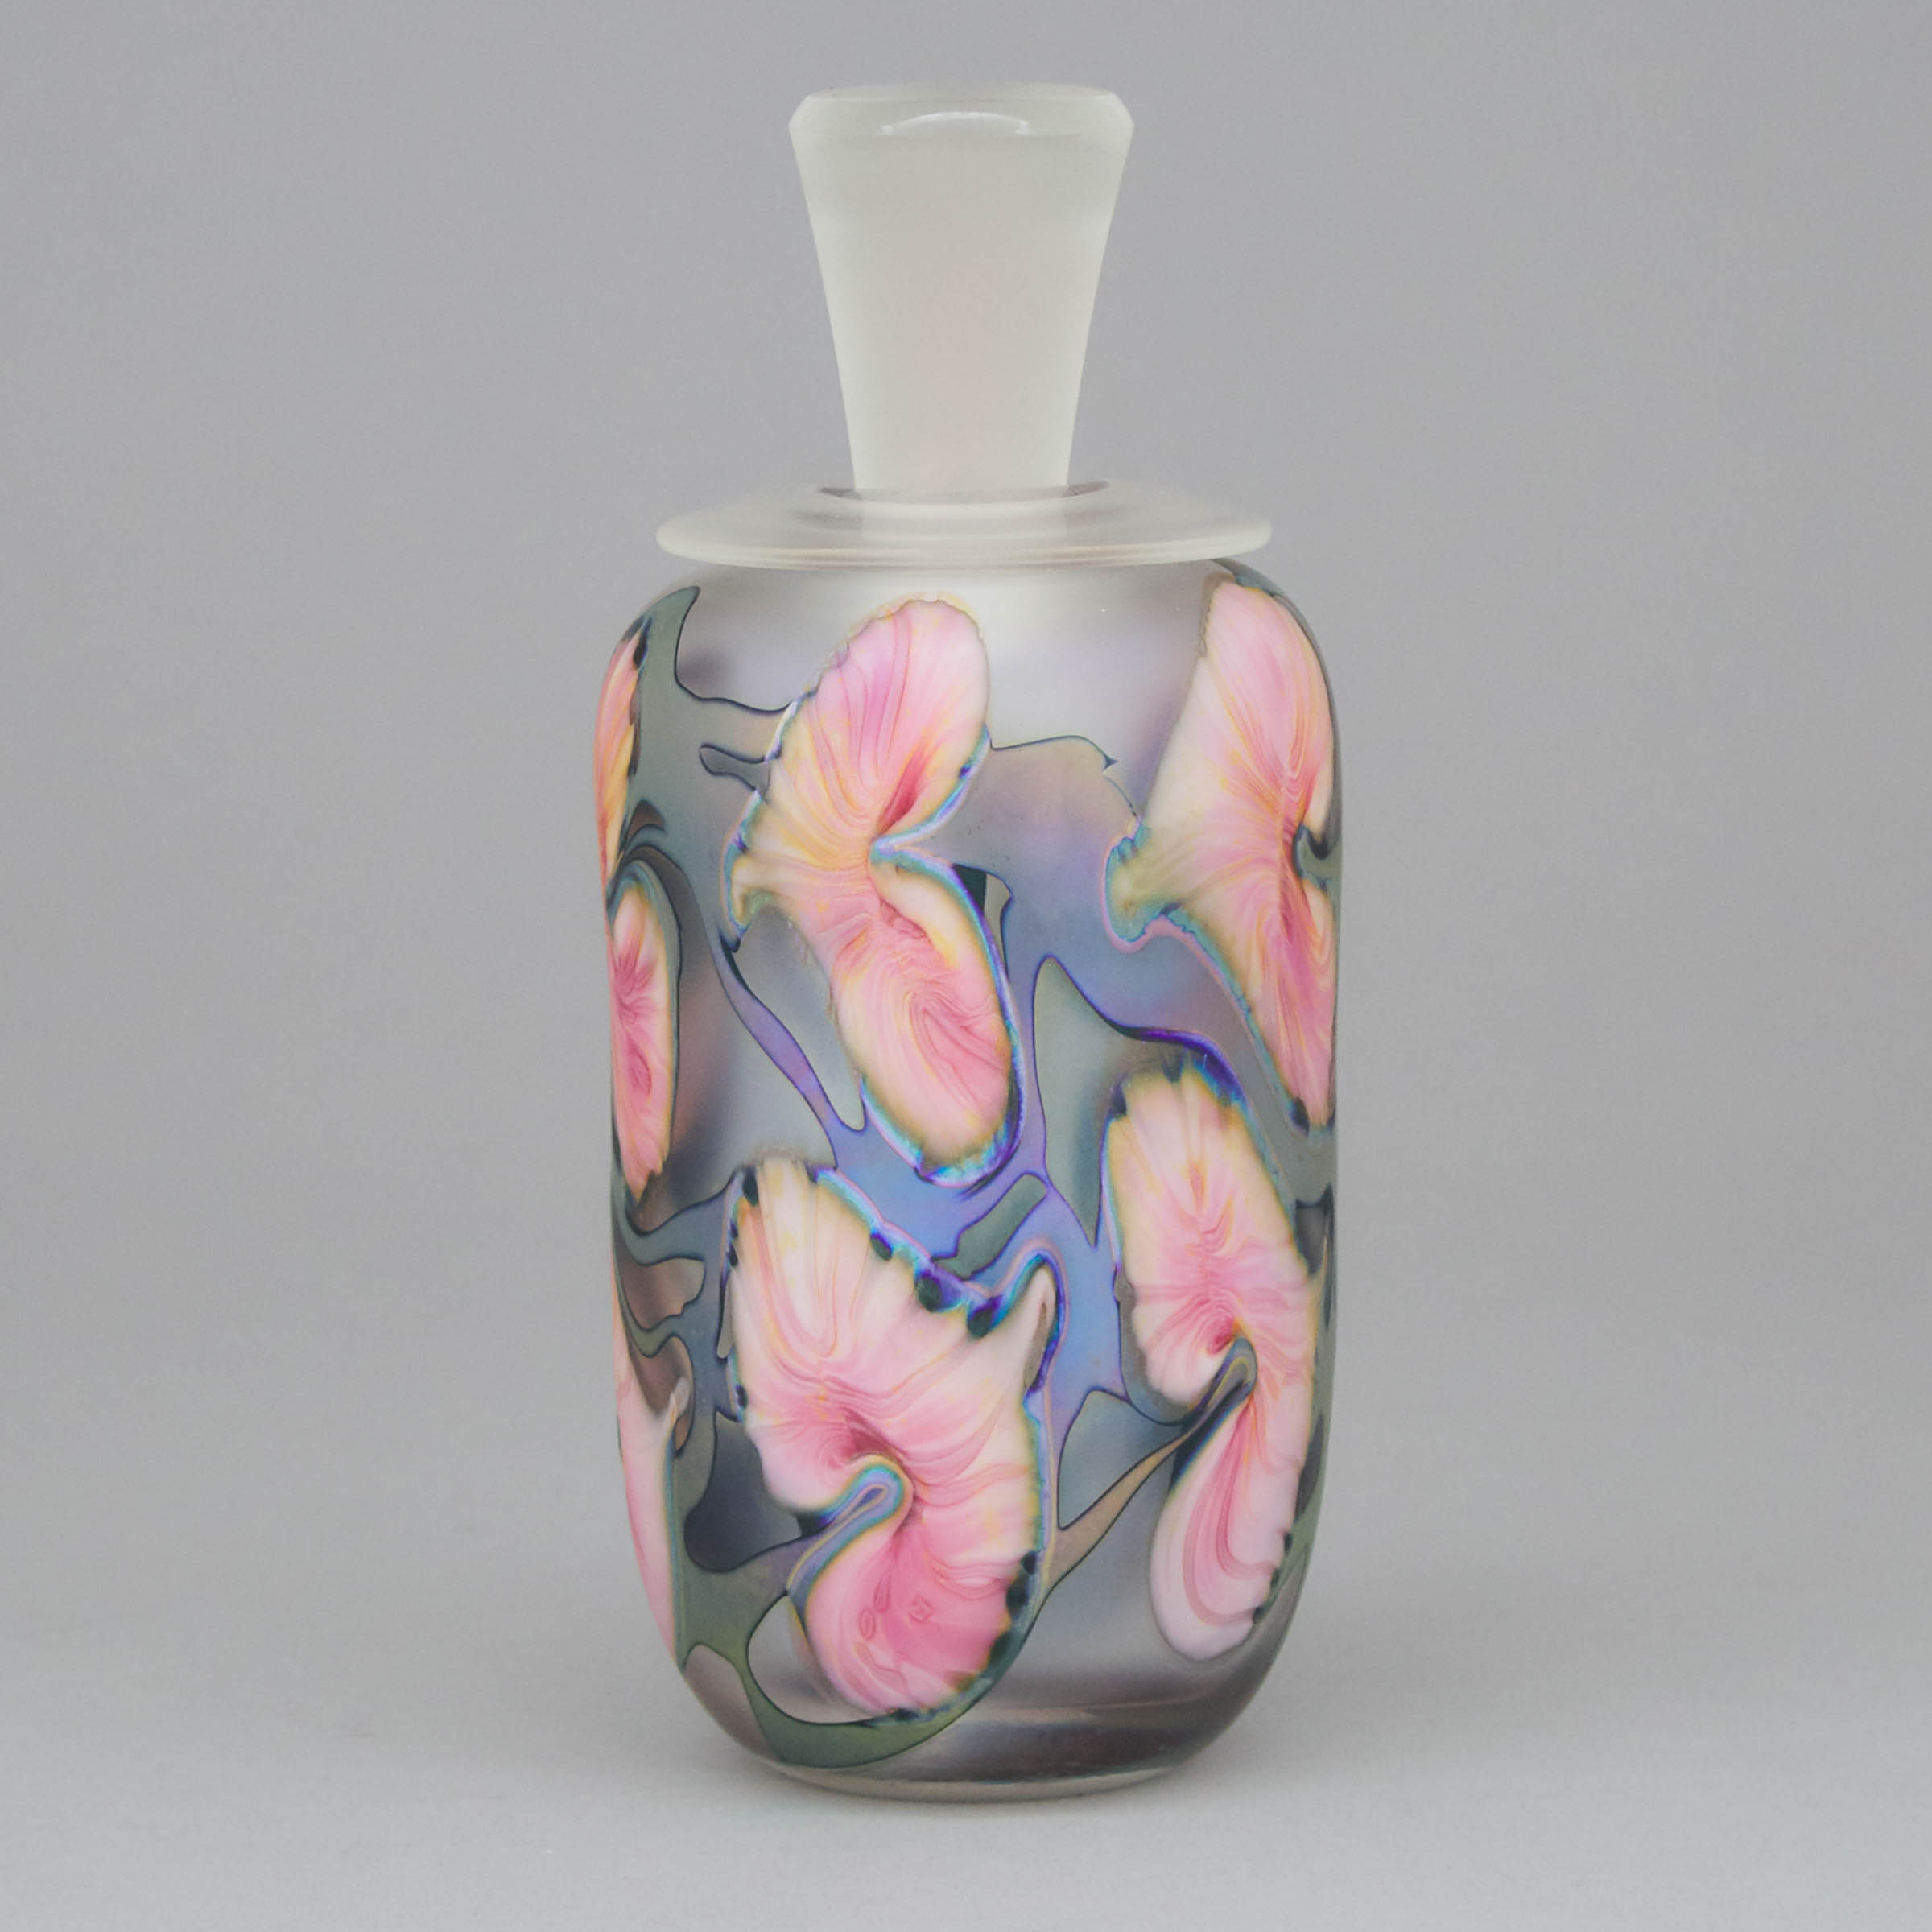 John Lotton (American, b.1964), Iridescent Glass Perfume Bottle, 1991